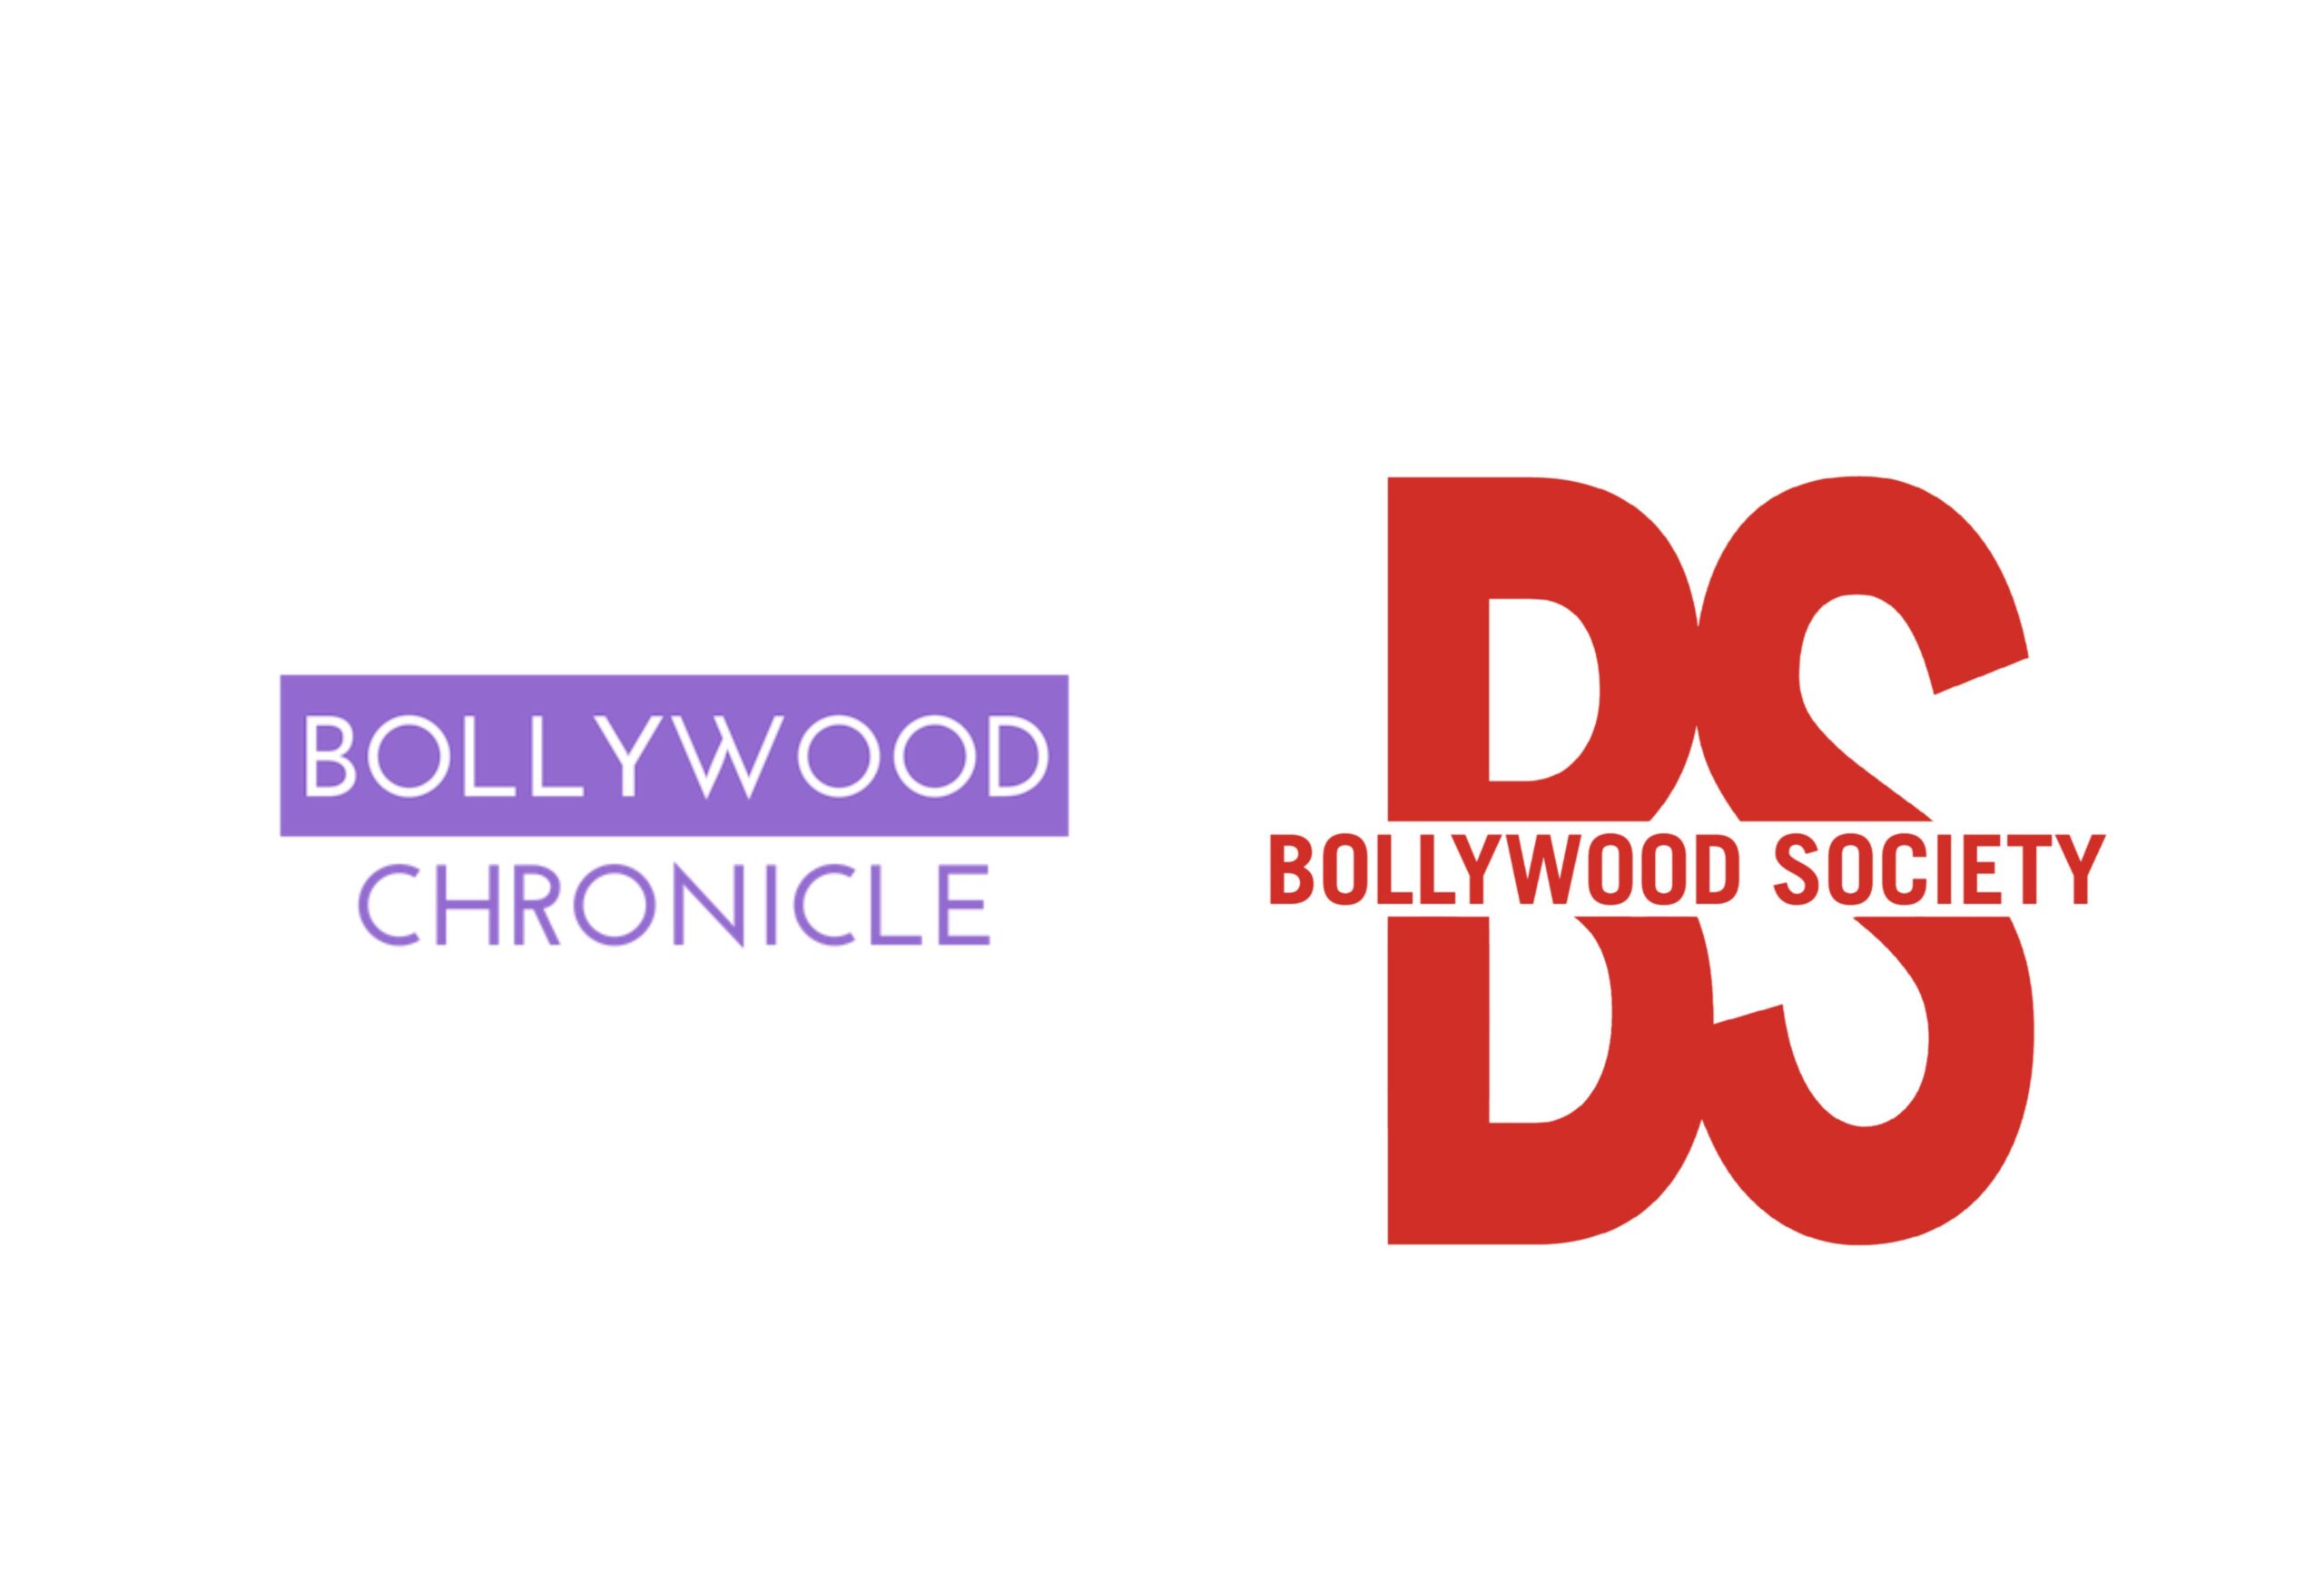 Bollywood chronicle and bollywood society